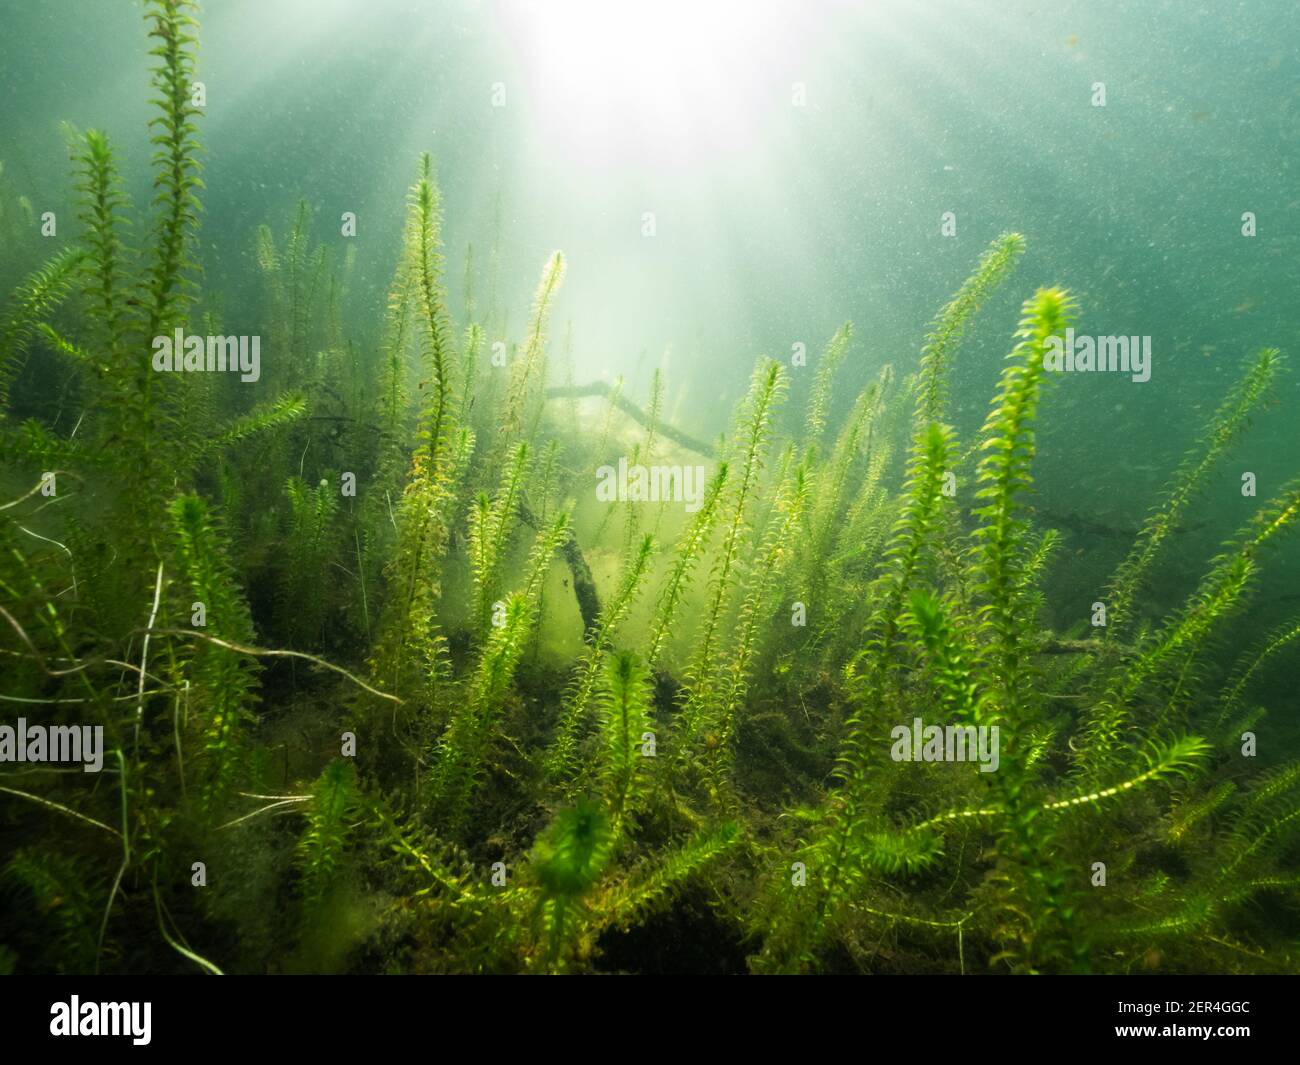 Underwater scenery with green waterweed vegetation Stock Photo